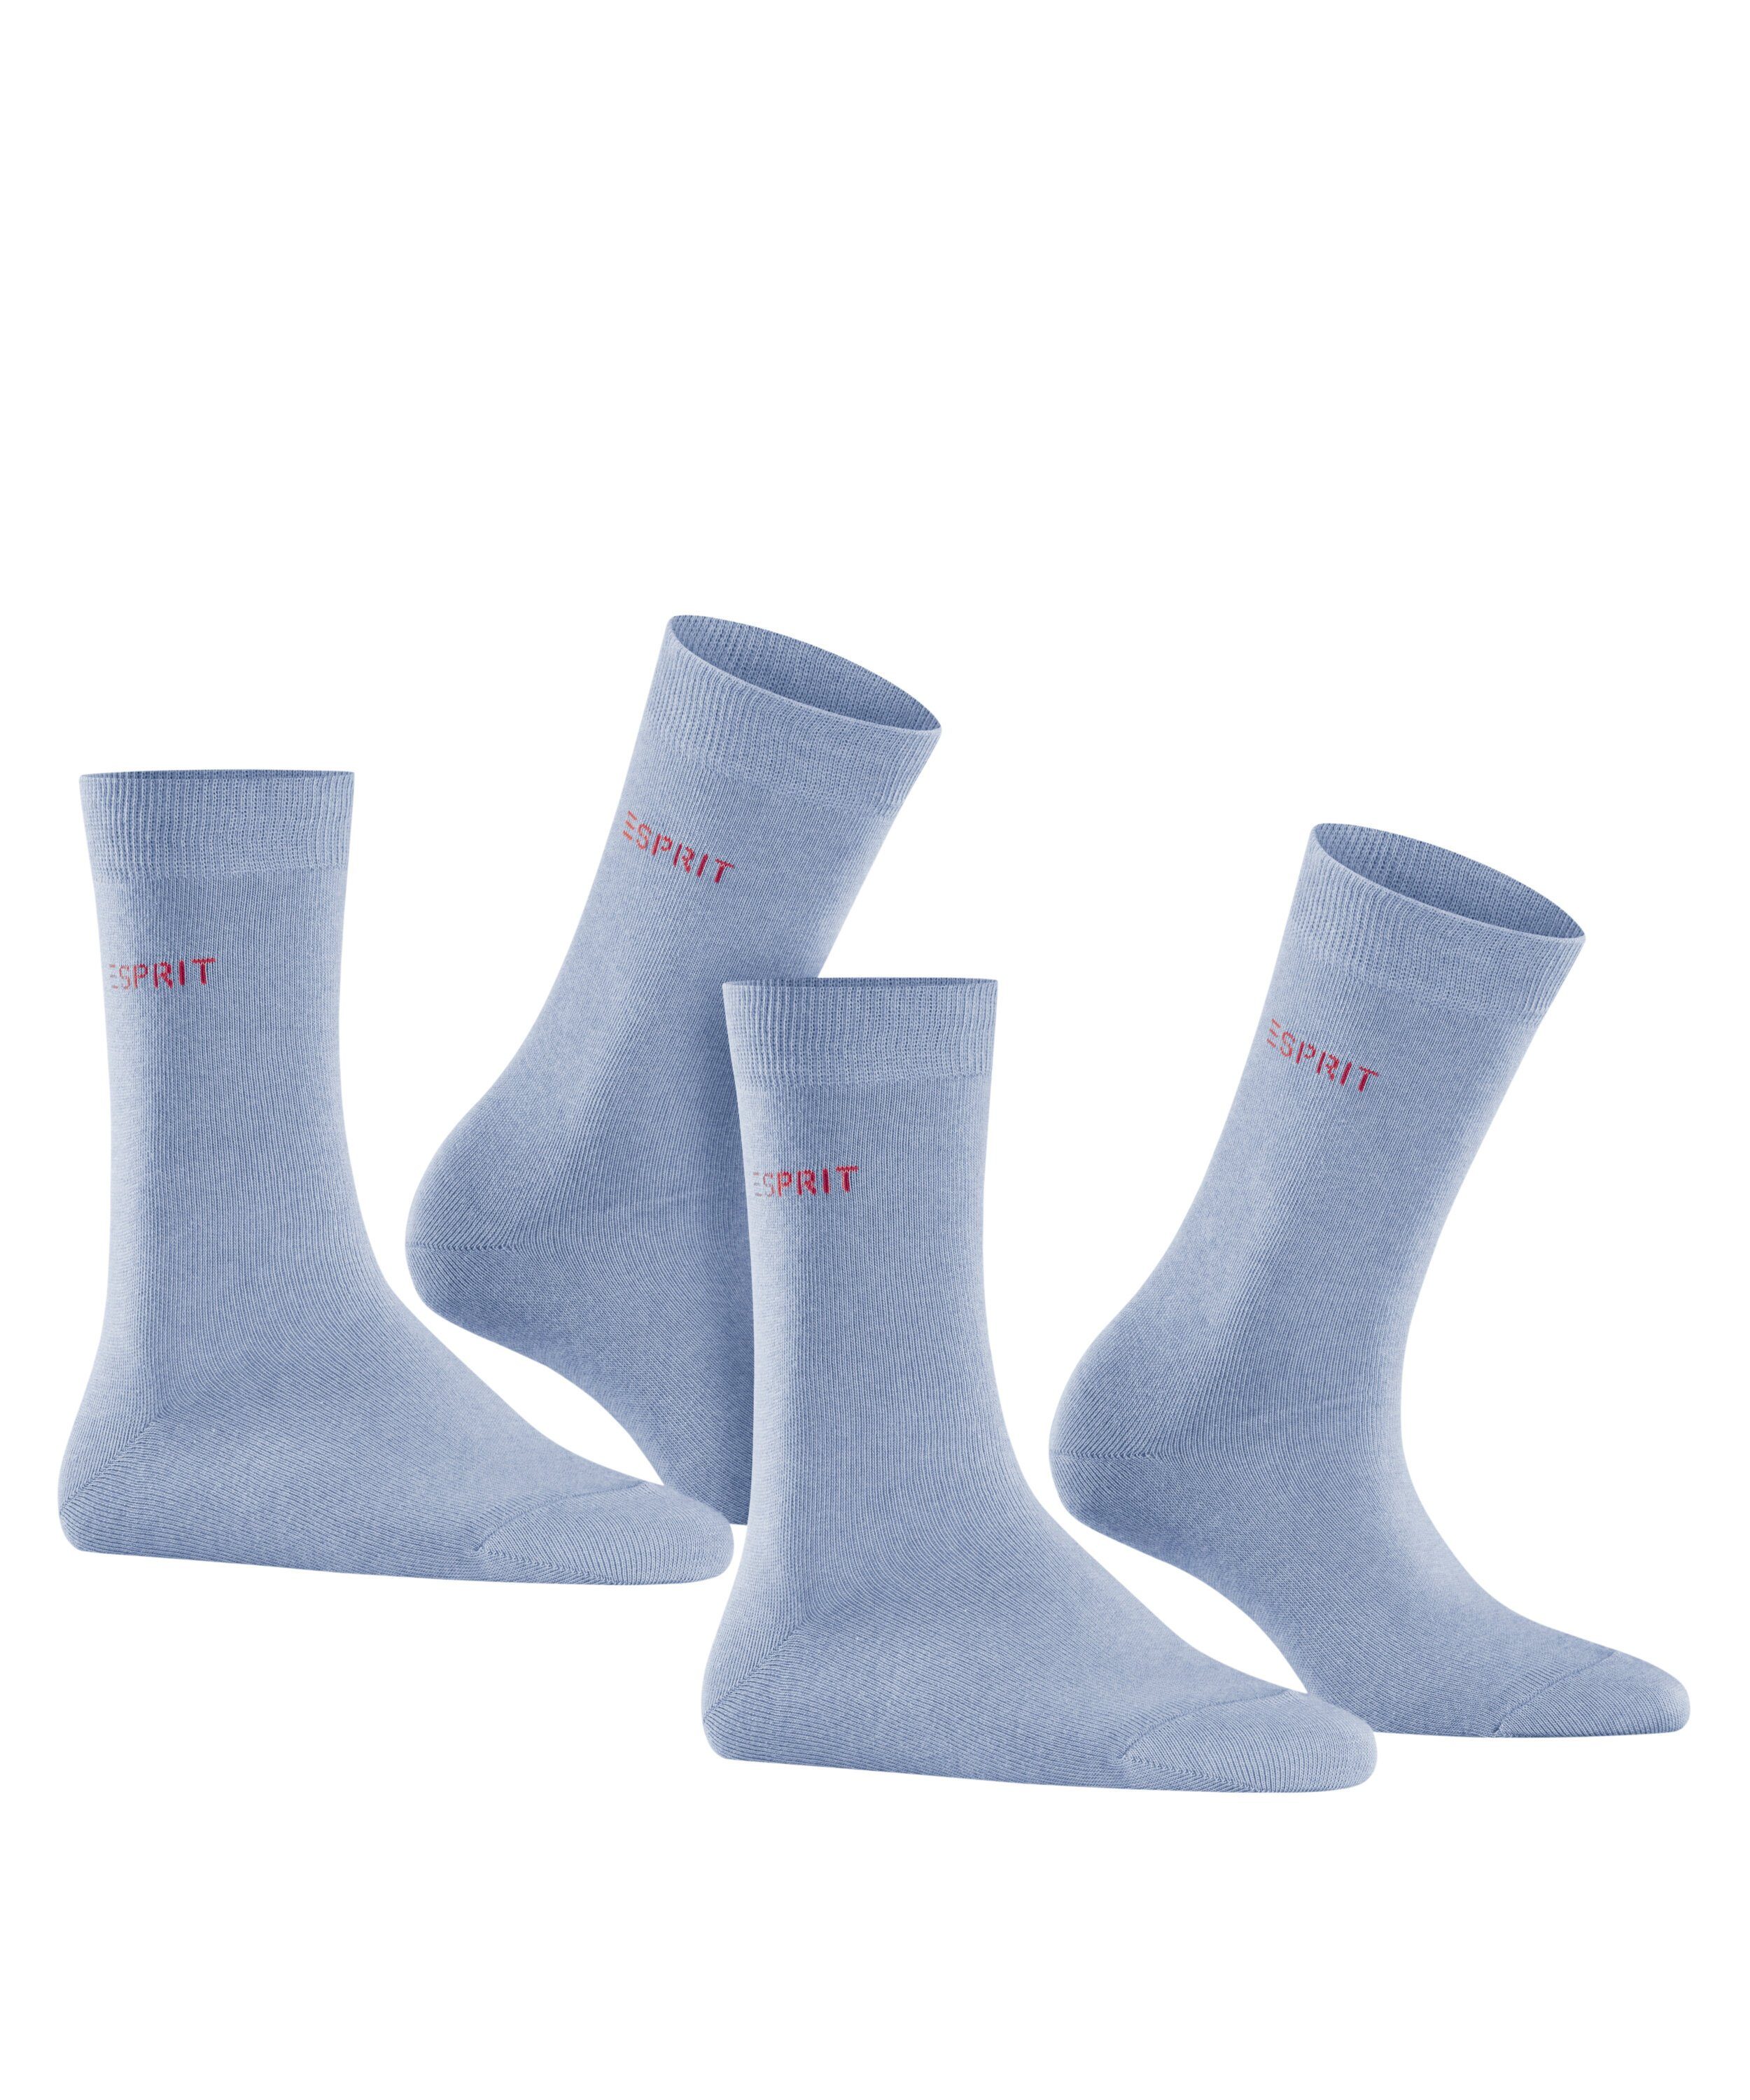 Esprit (6458) Uni jeans Socken 2-Pack (2-Paar)